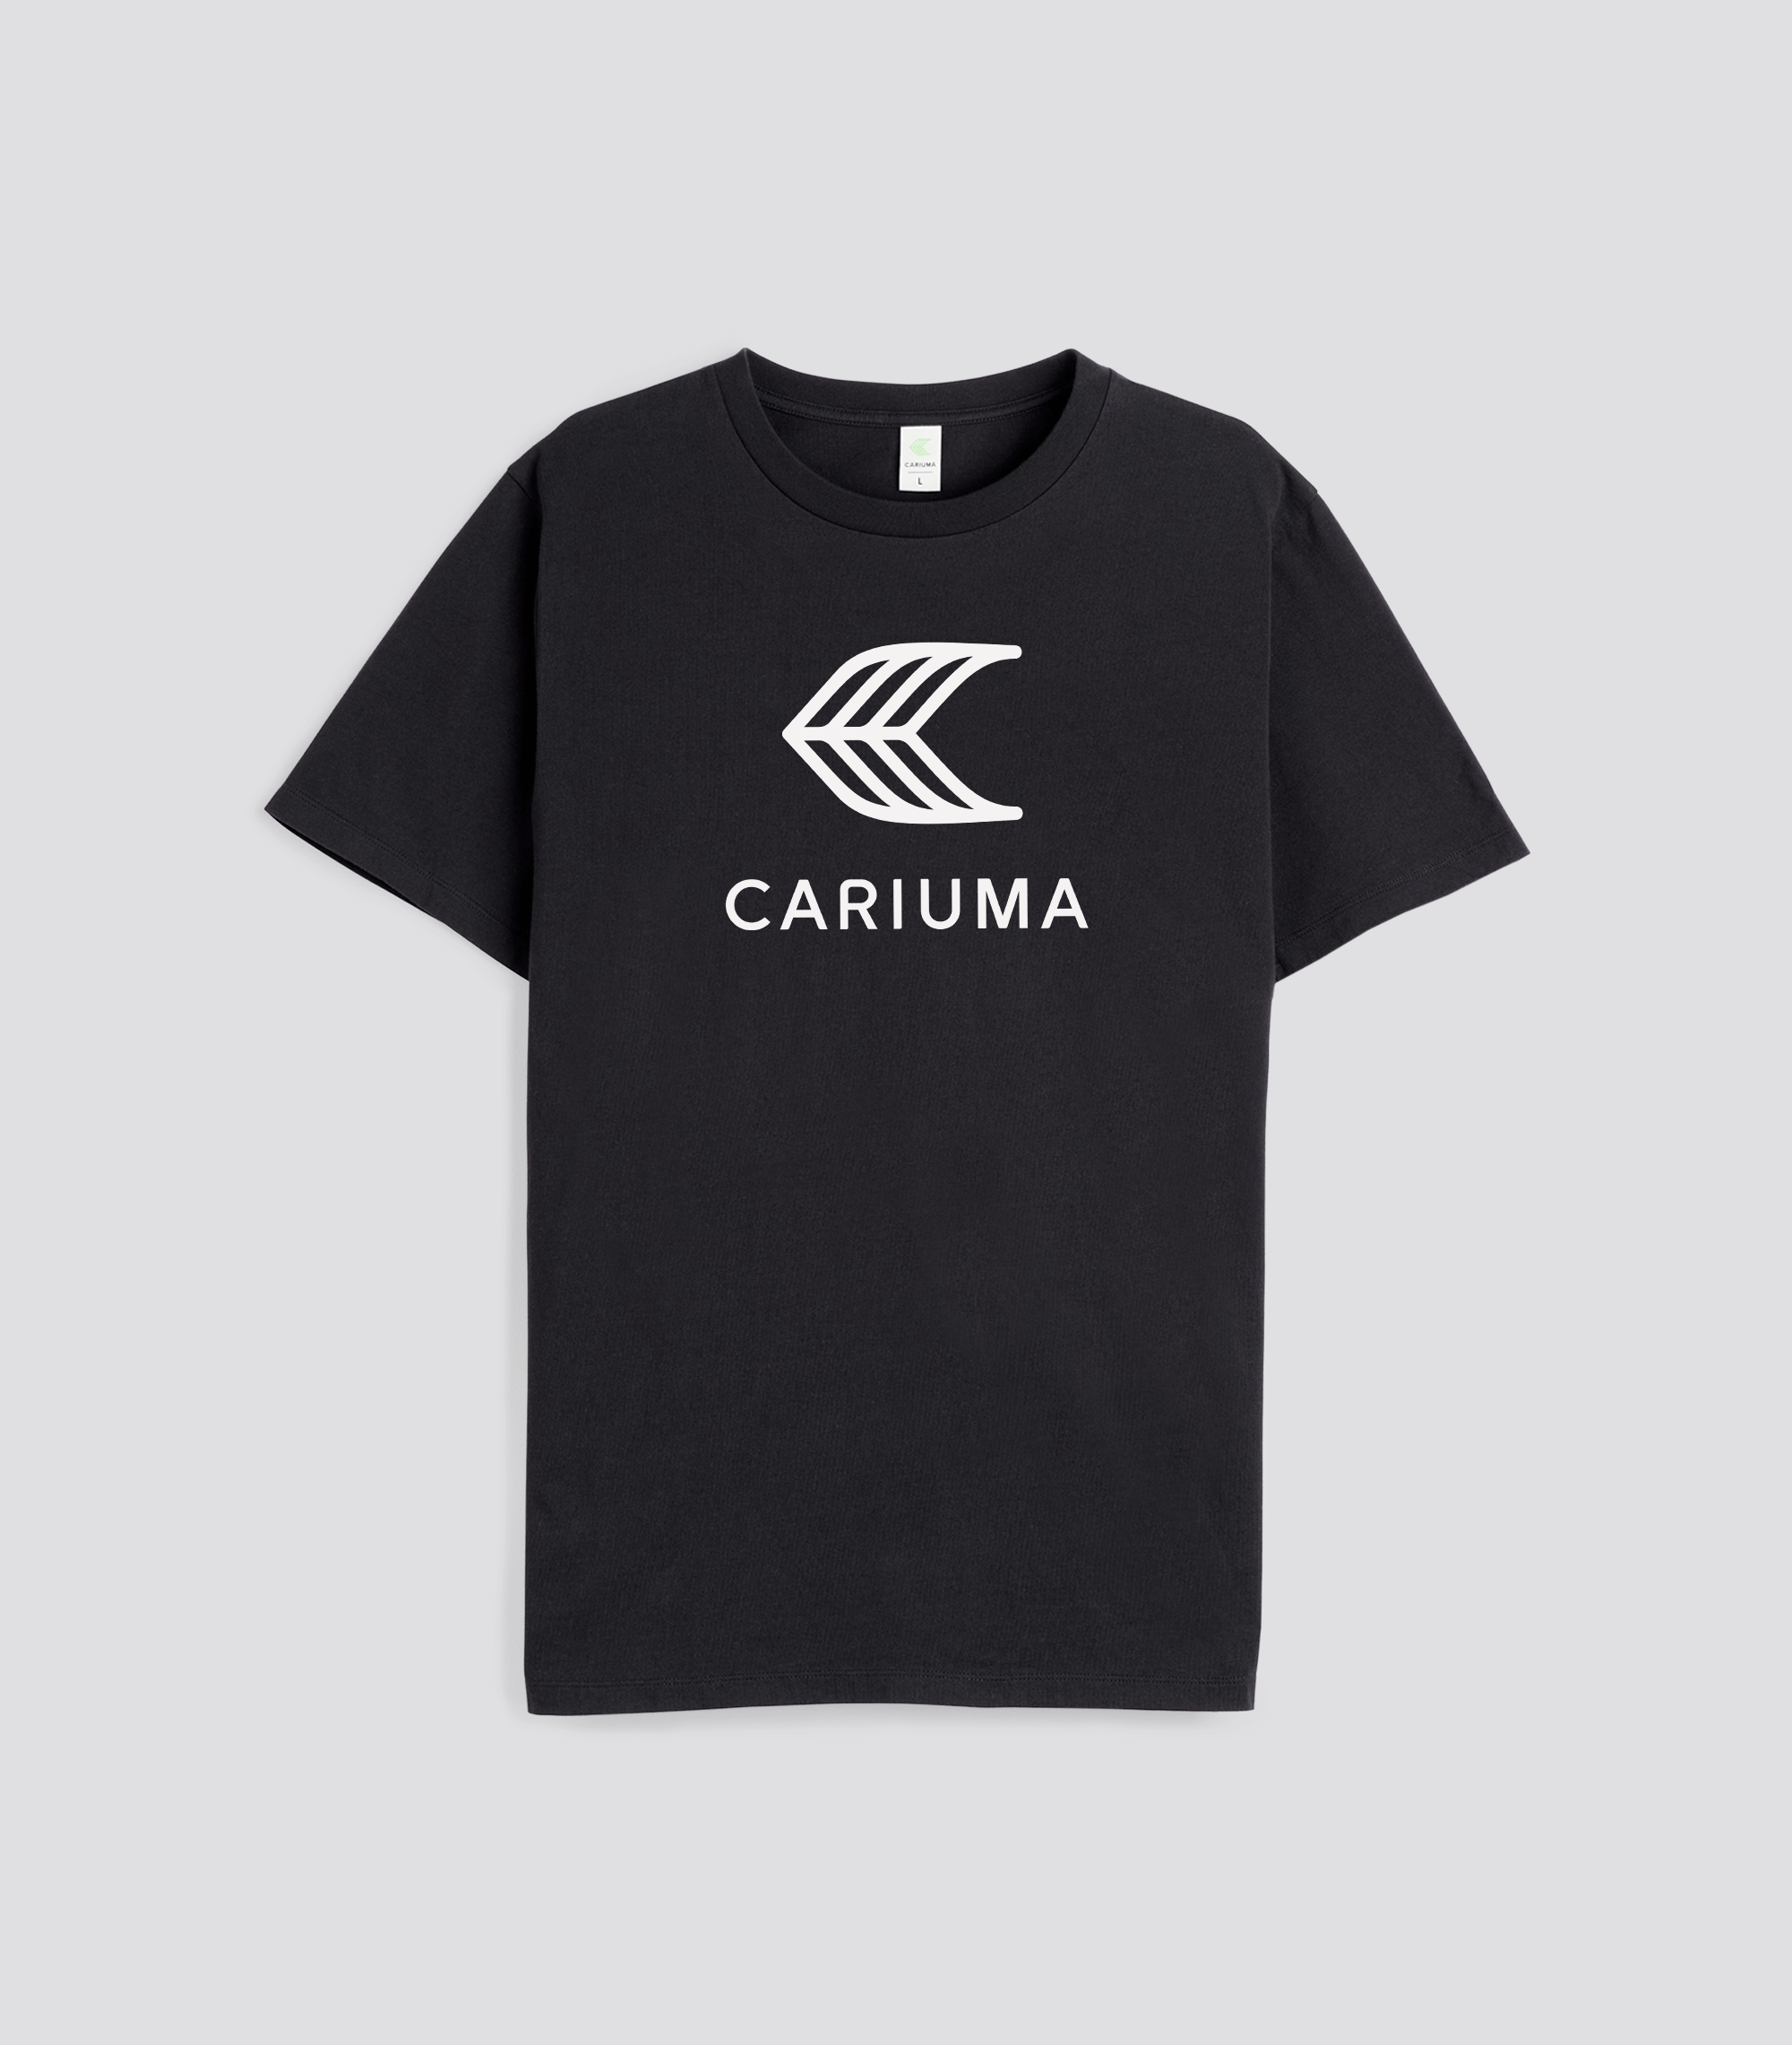 CARIUMA: Unisex Black T-shirt | Organic Cotton | CARIUMA Team T-shirt